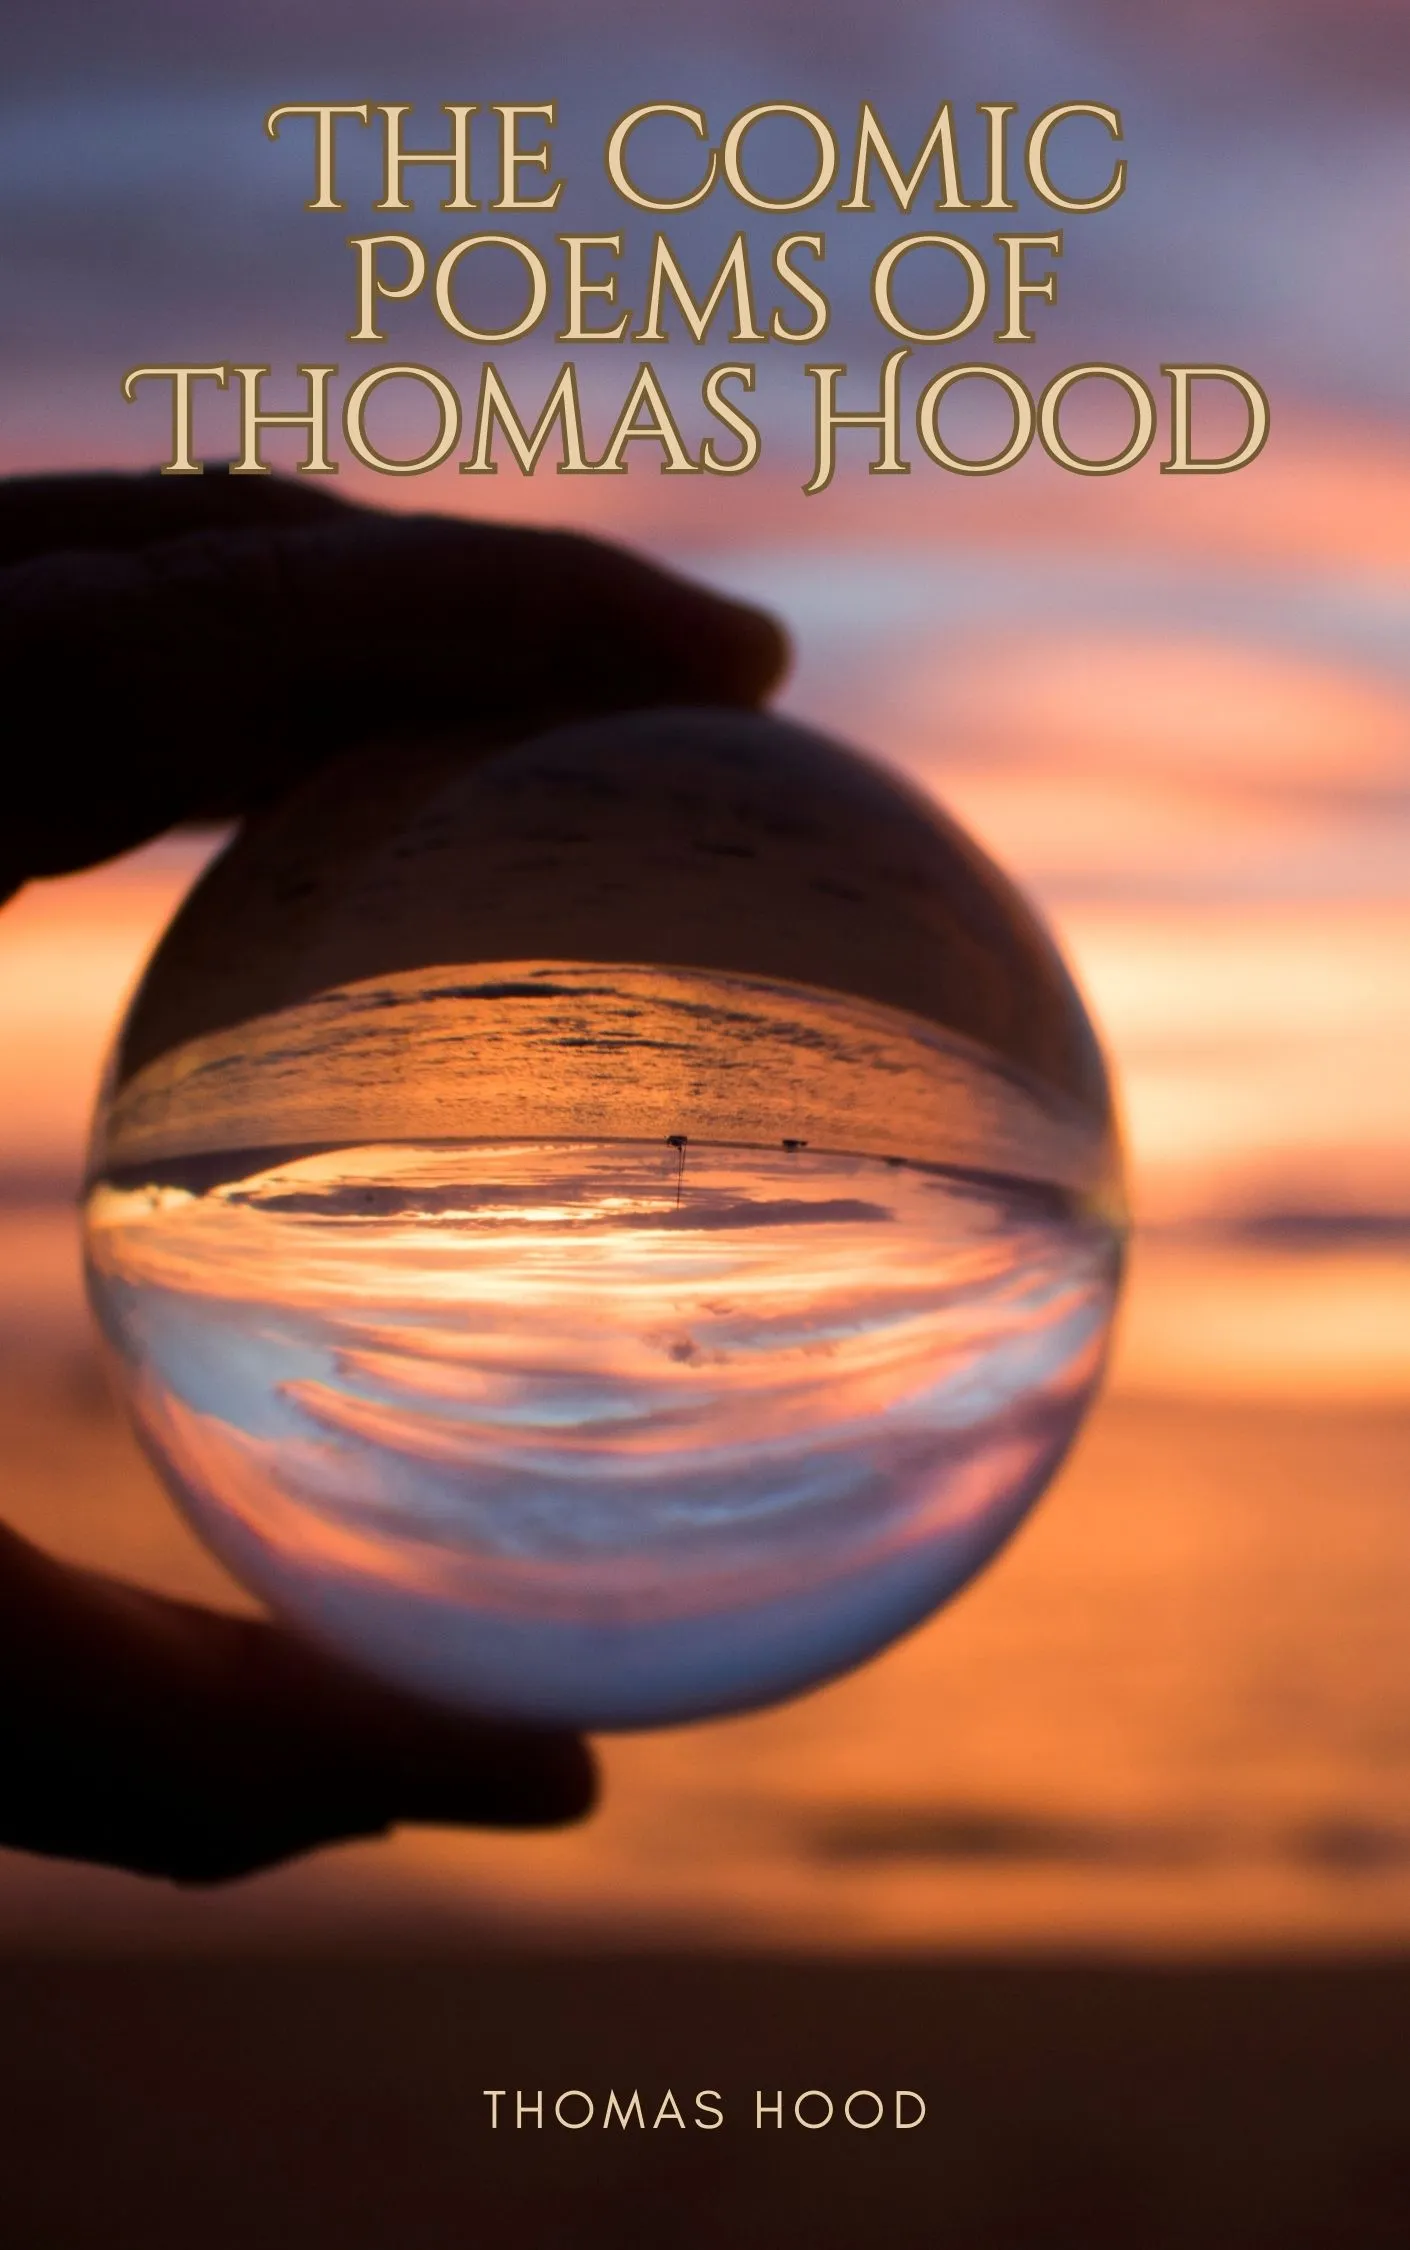 The Comic Poems of Thomas Hood by Thomas Hood Audiobook